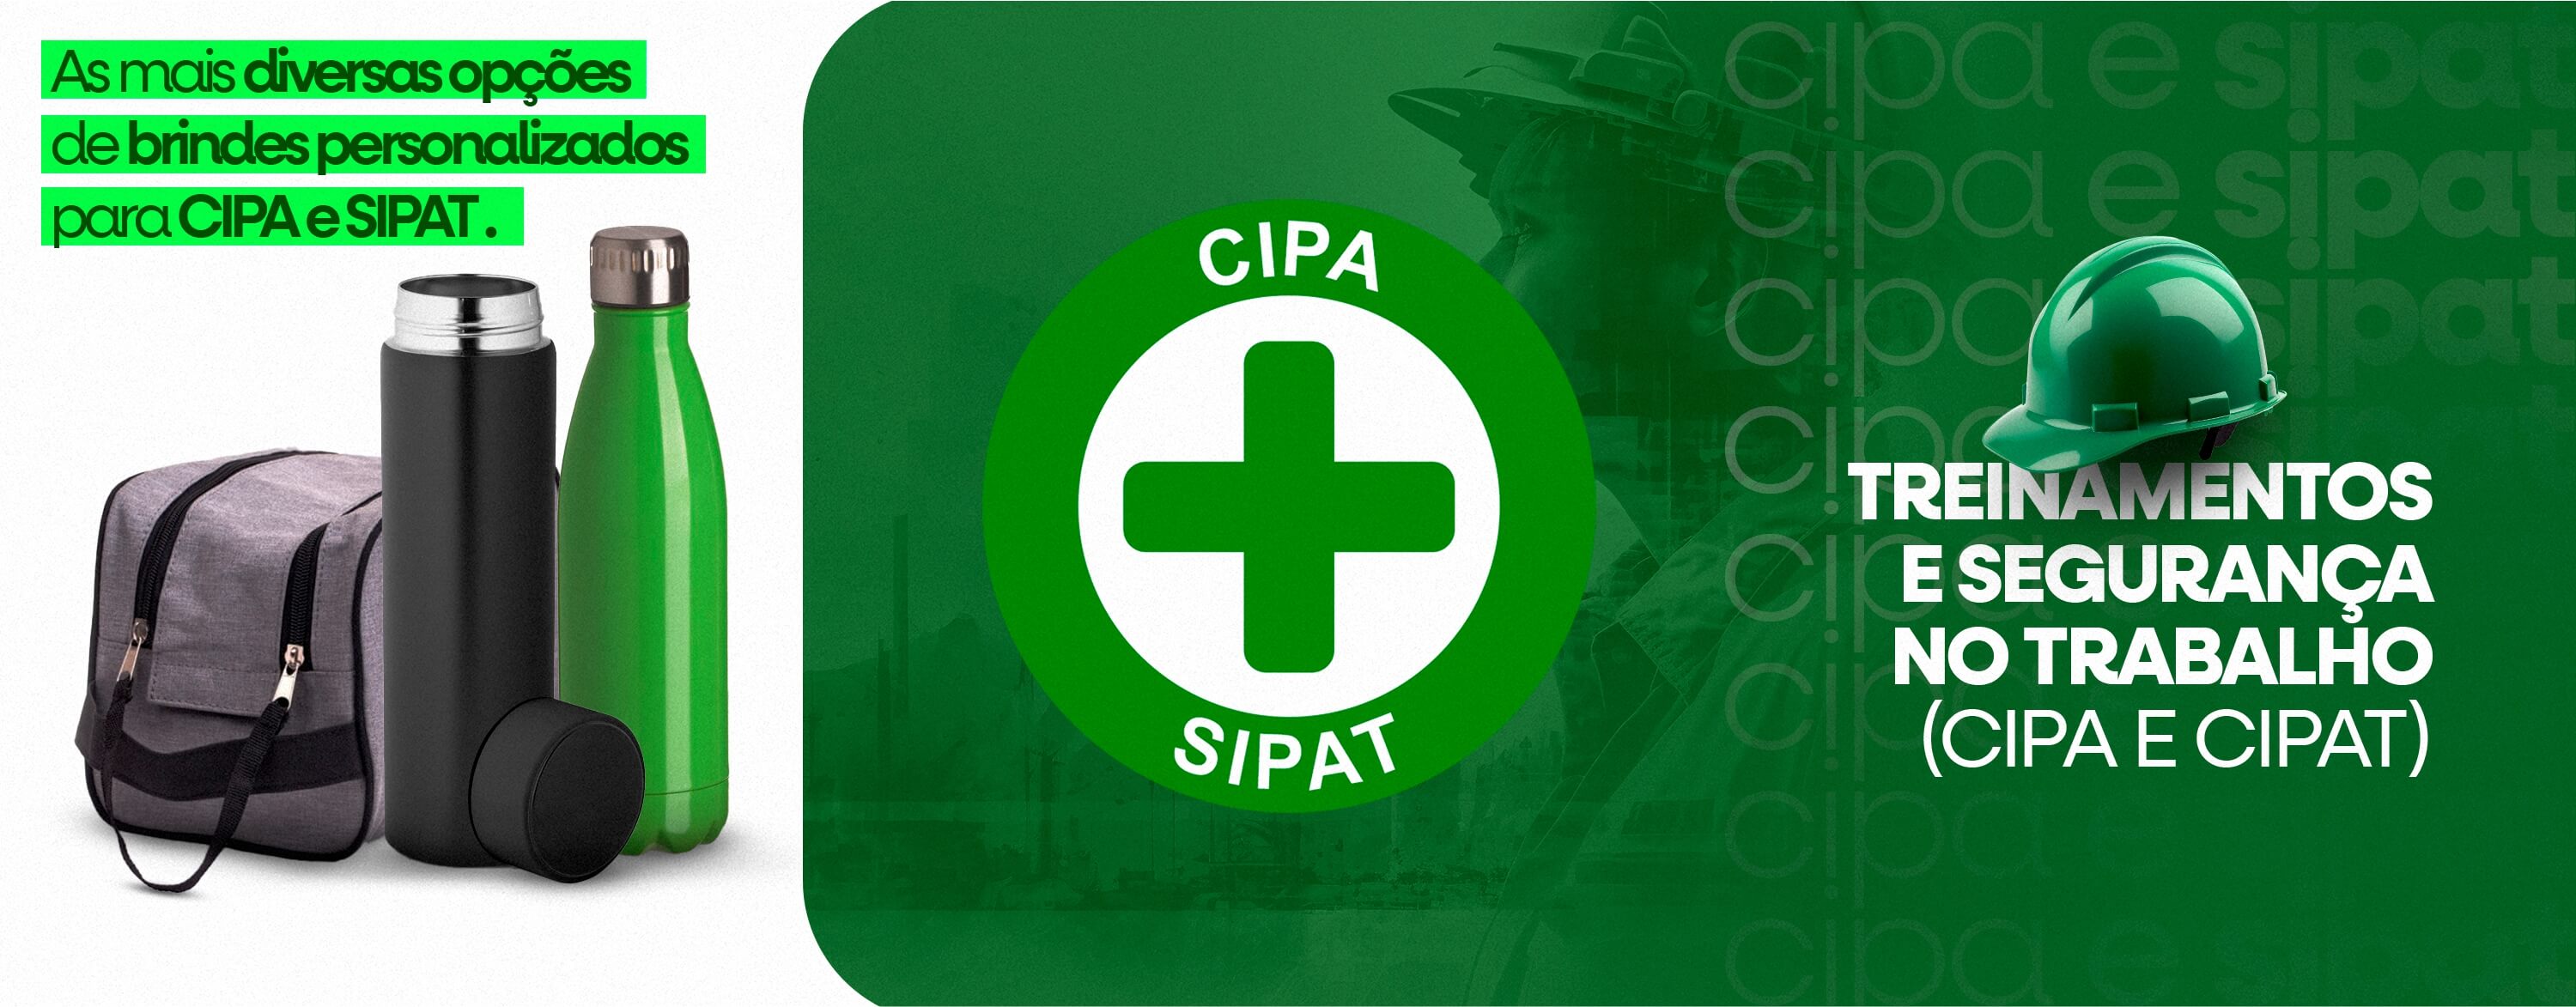 brindes-personalizados-para-CIPA-SIPAT-seguranca-no-trabalho-bempresentebrindes-banner-